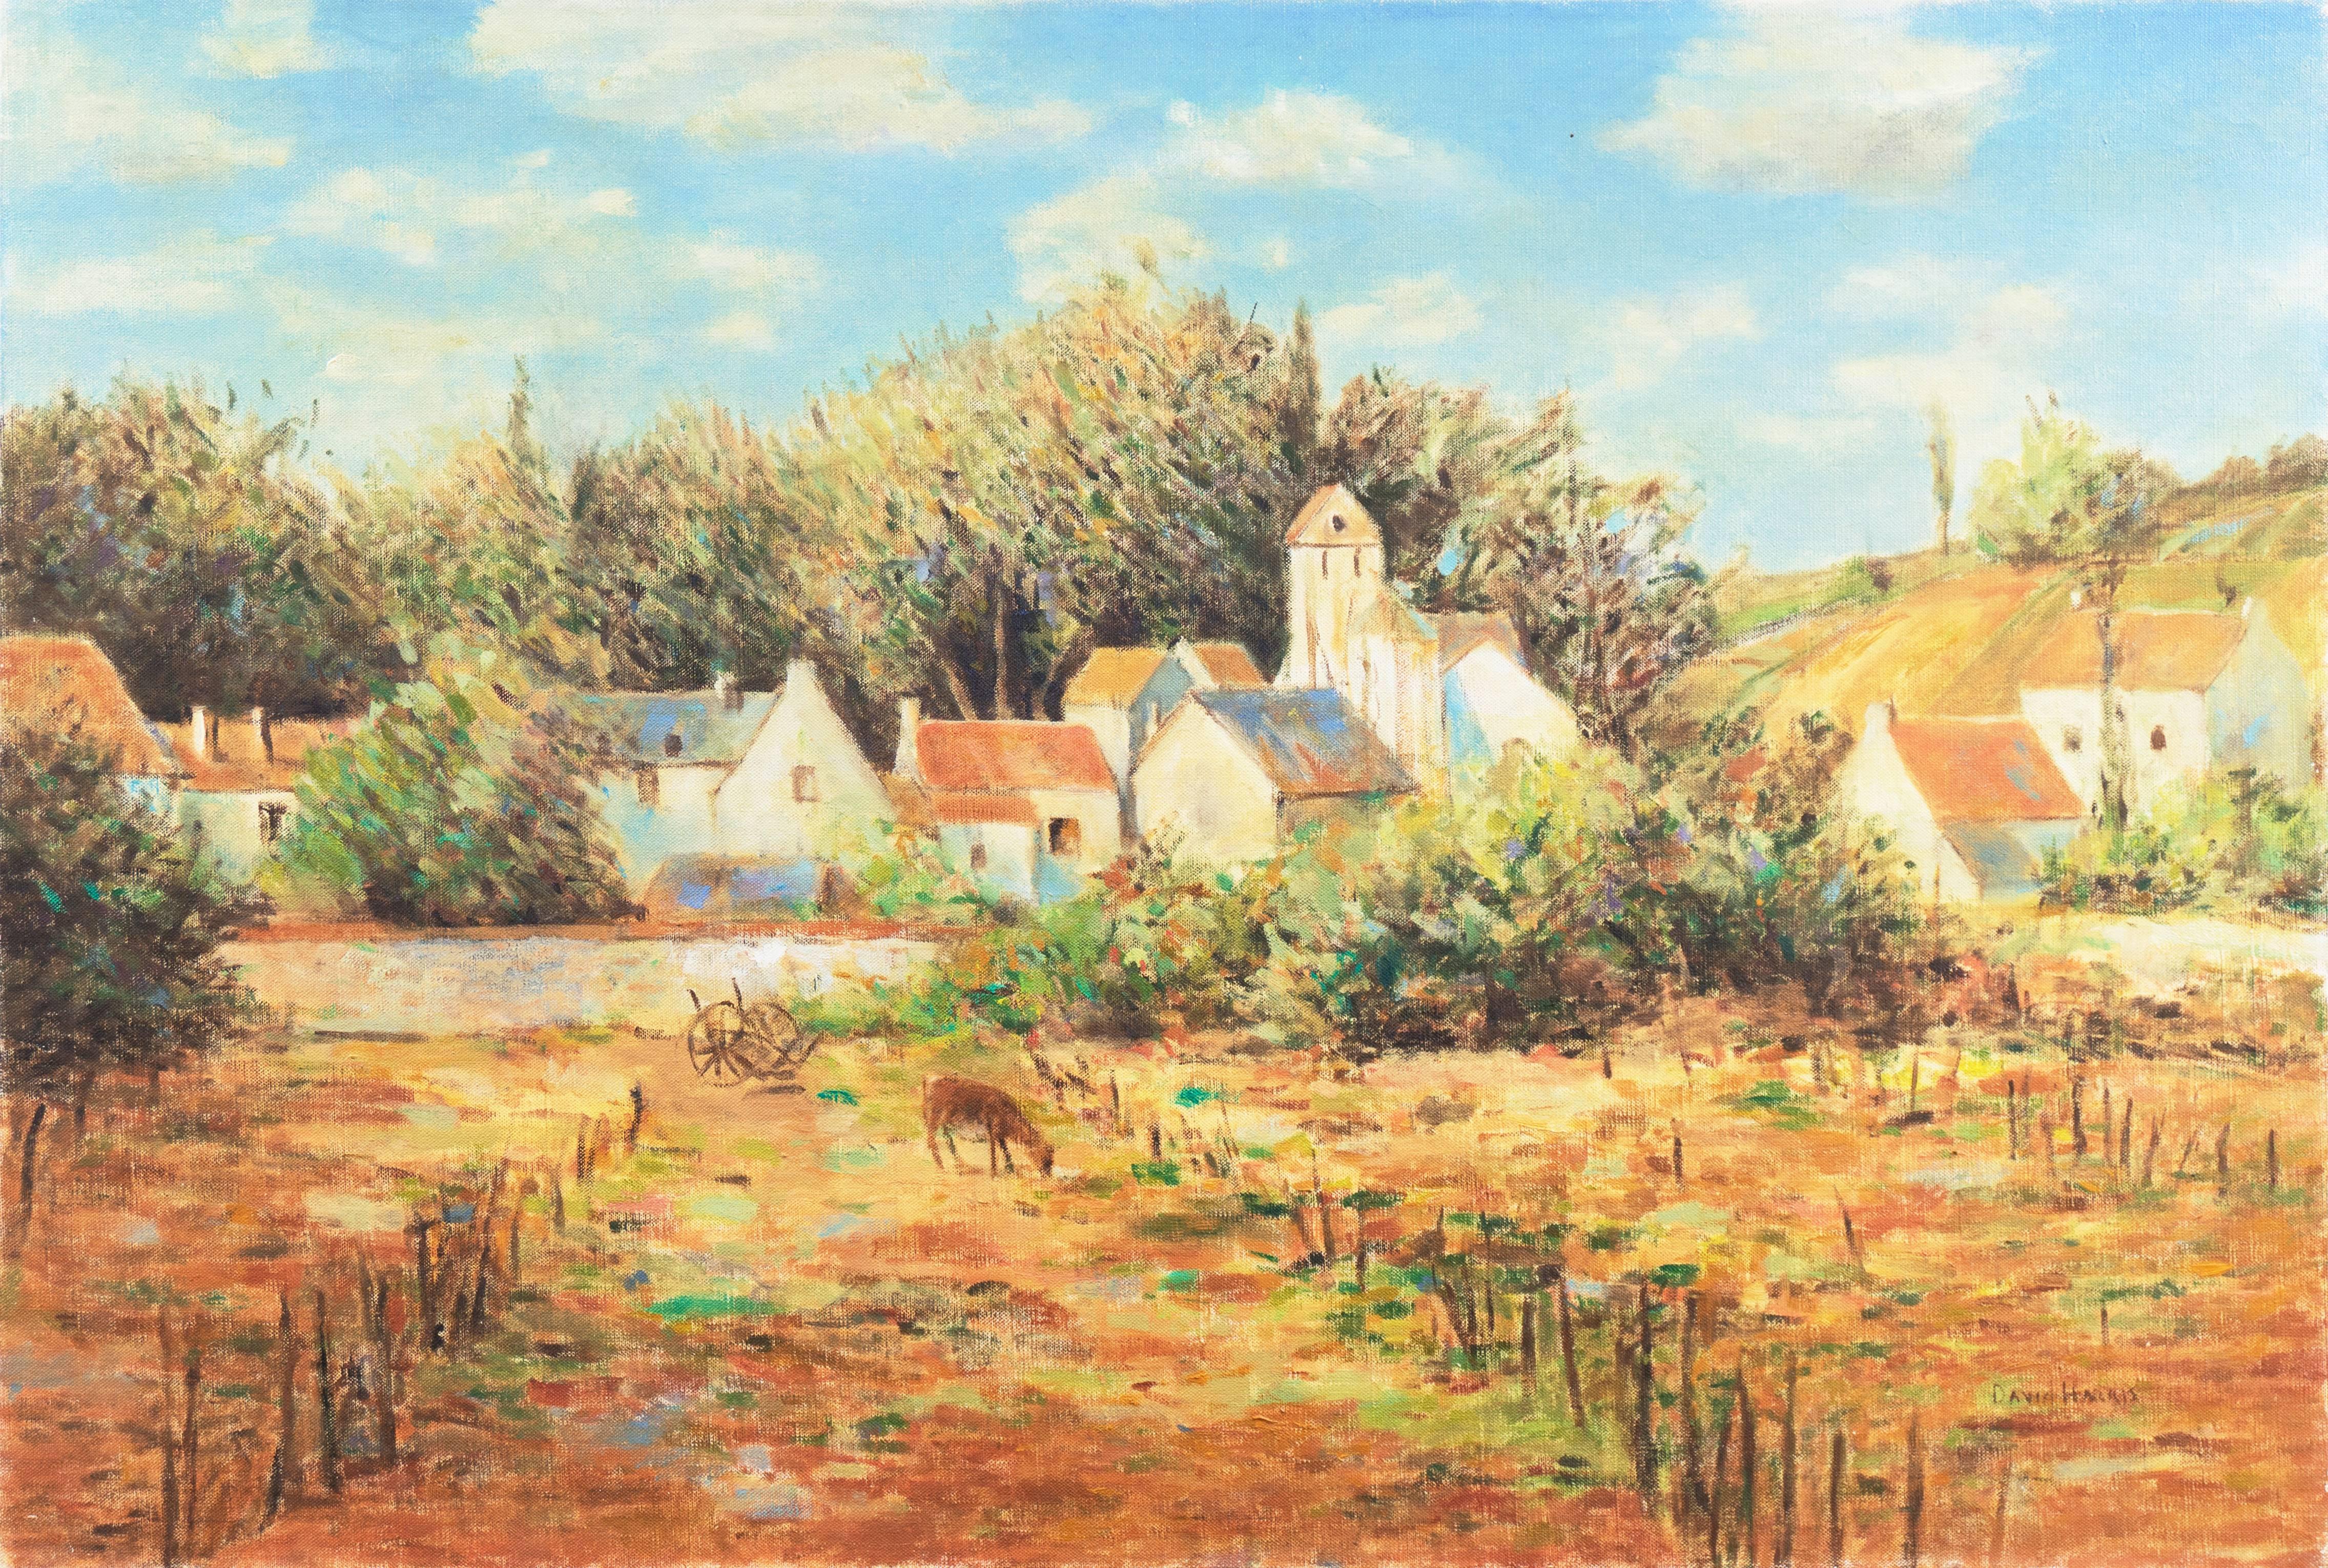 David Harris Landscape Painting - 'Landscape in Provence', Large American Impressionist Oil, California artist